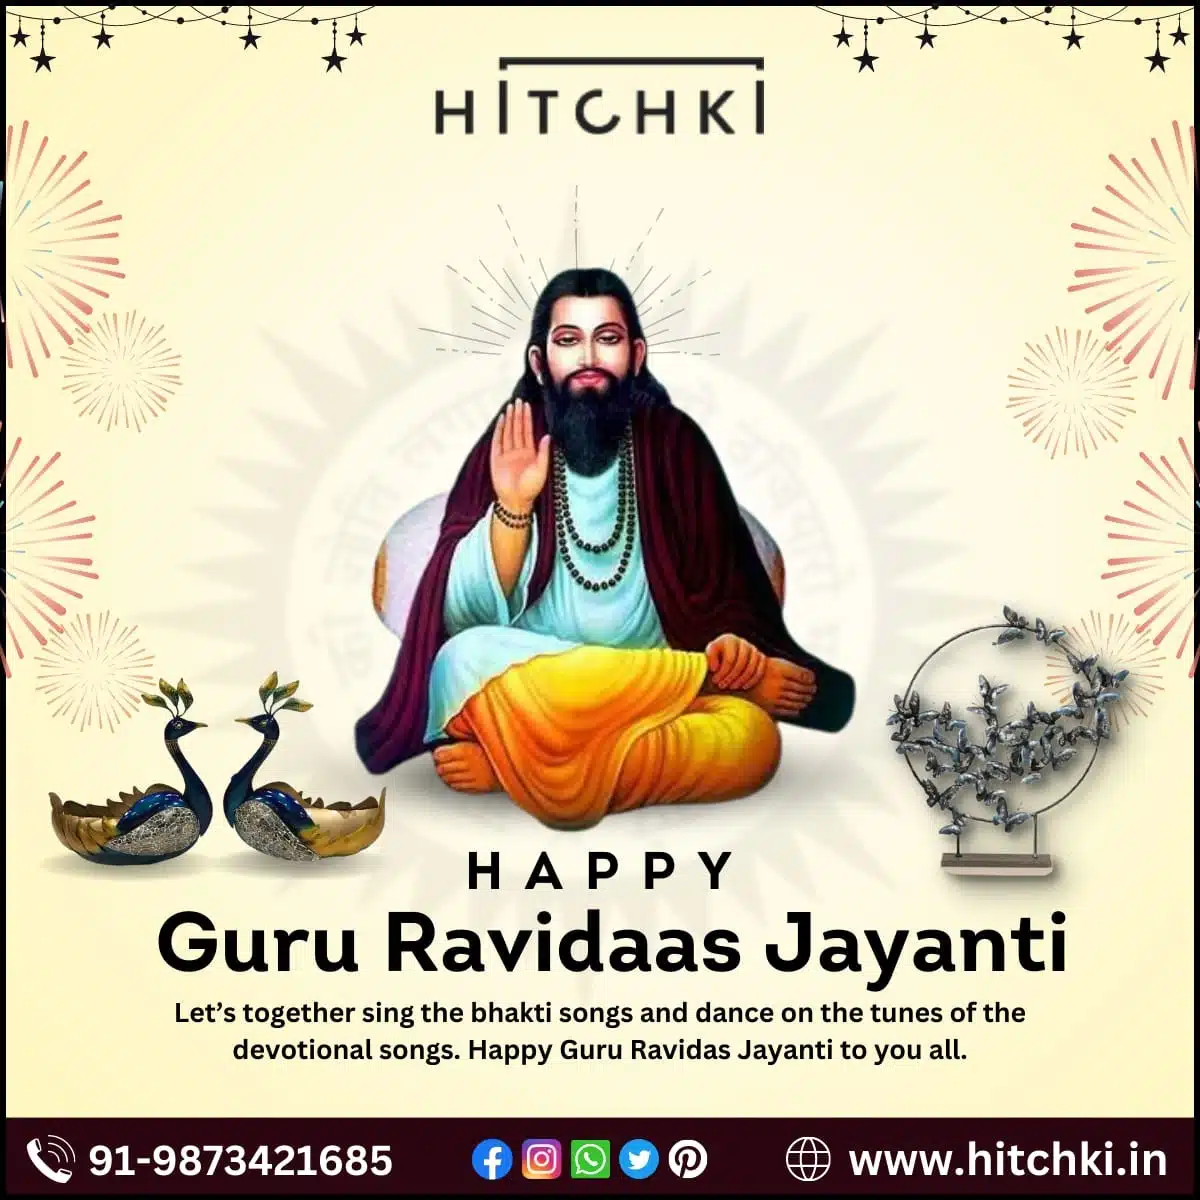 Happy Guru Ravidas Jayanti To All Of You